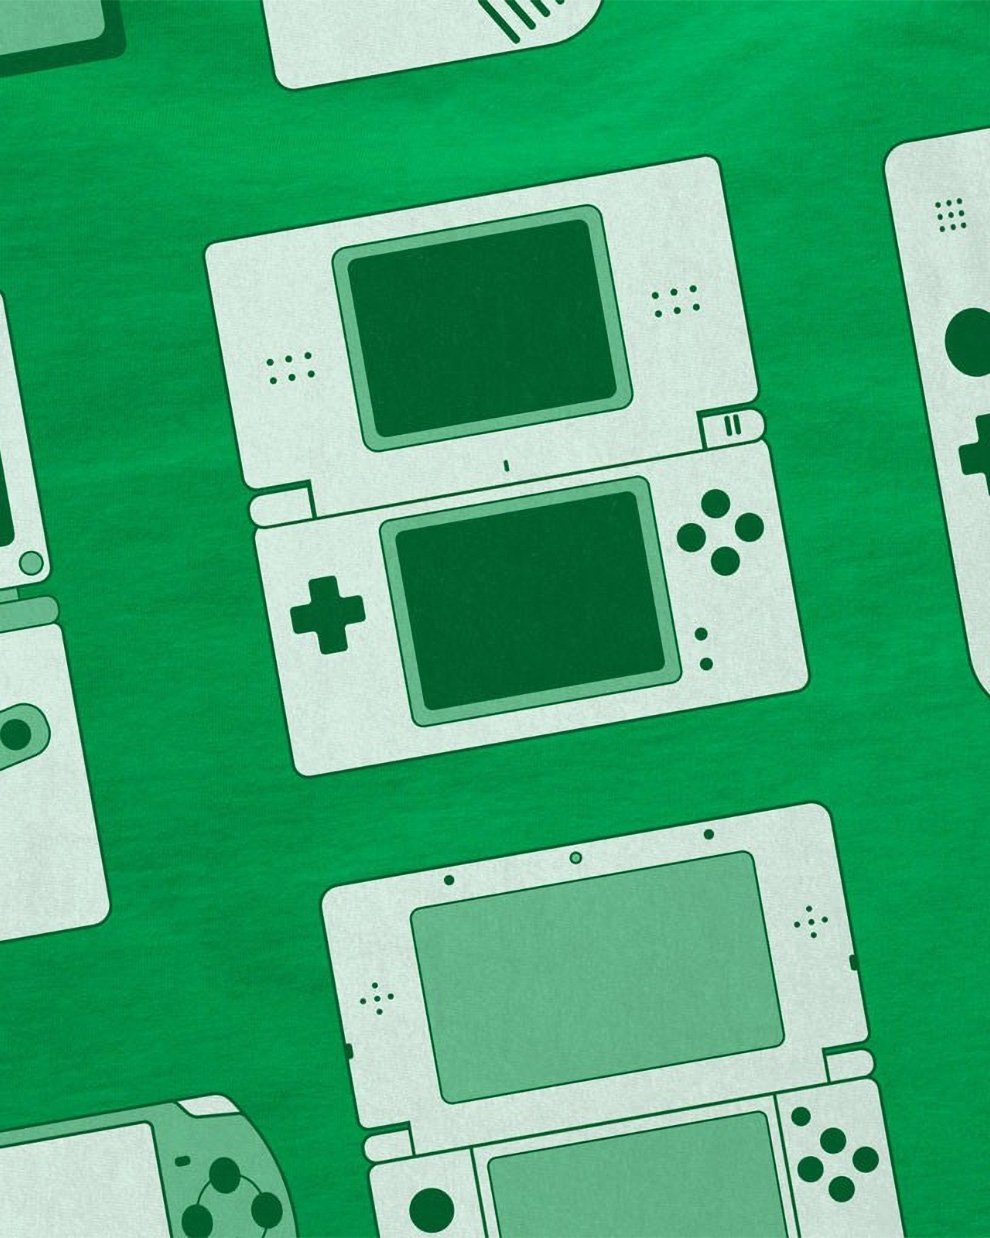 Konsole spielekonsole Handheld controller style3 T-Shirt videospiel Print-Shirt Herren grün